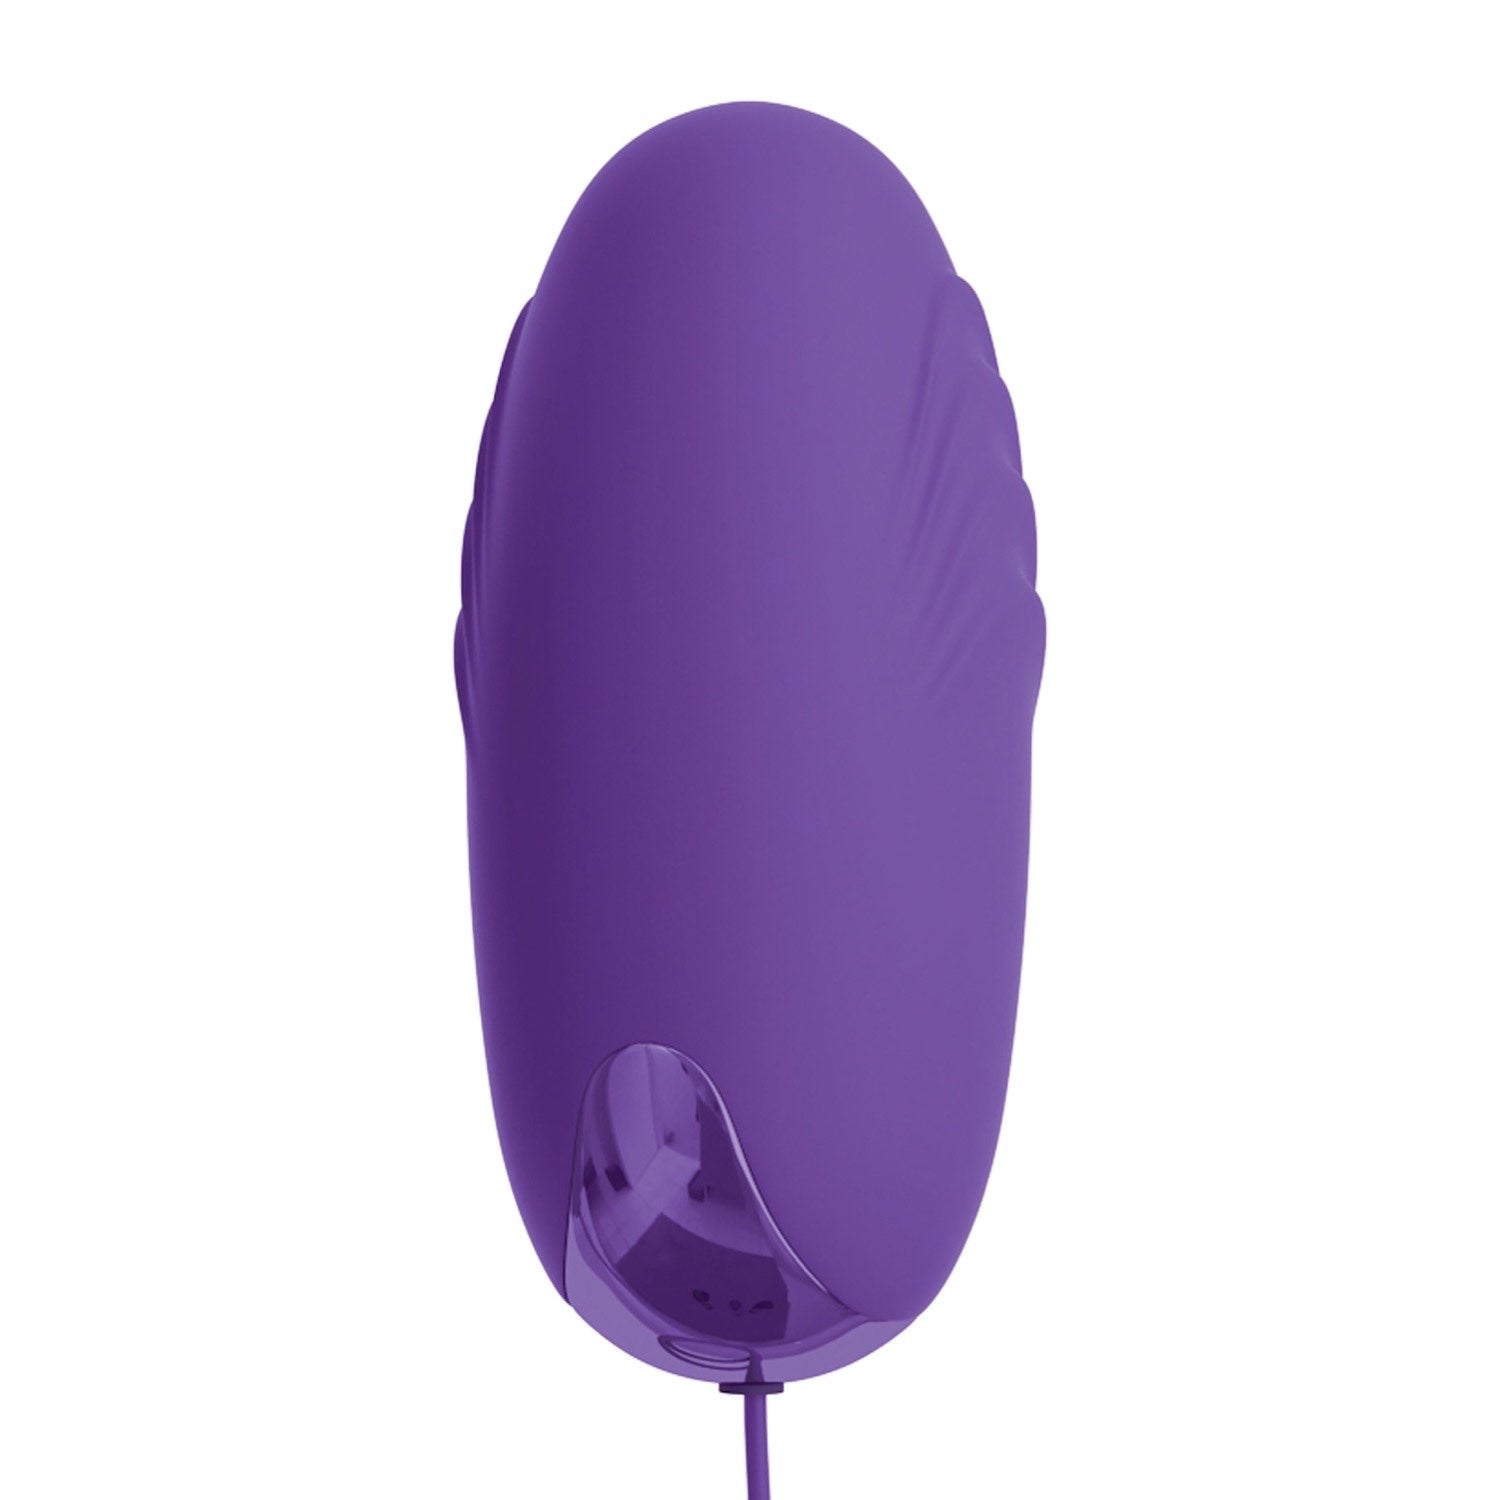 我的天啊！ 我的天啊！ Bullets #Happy - 紫色 USB 供电子弹头 by Pipedream